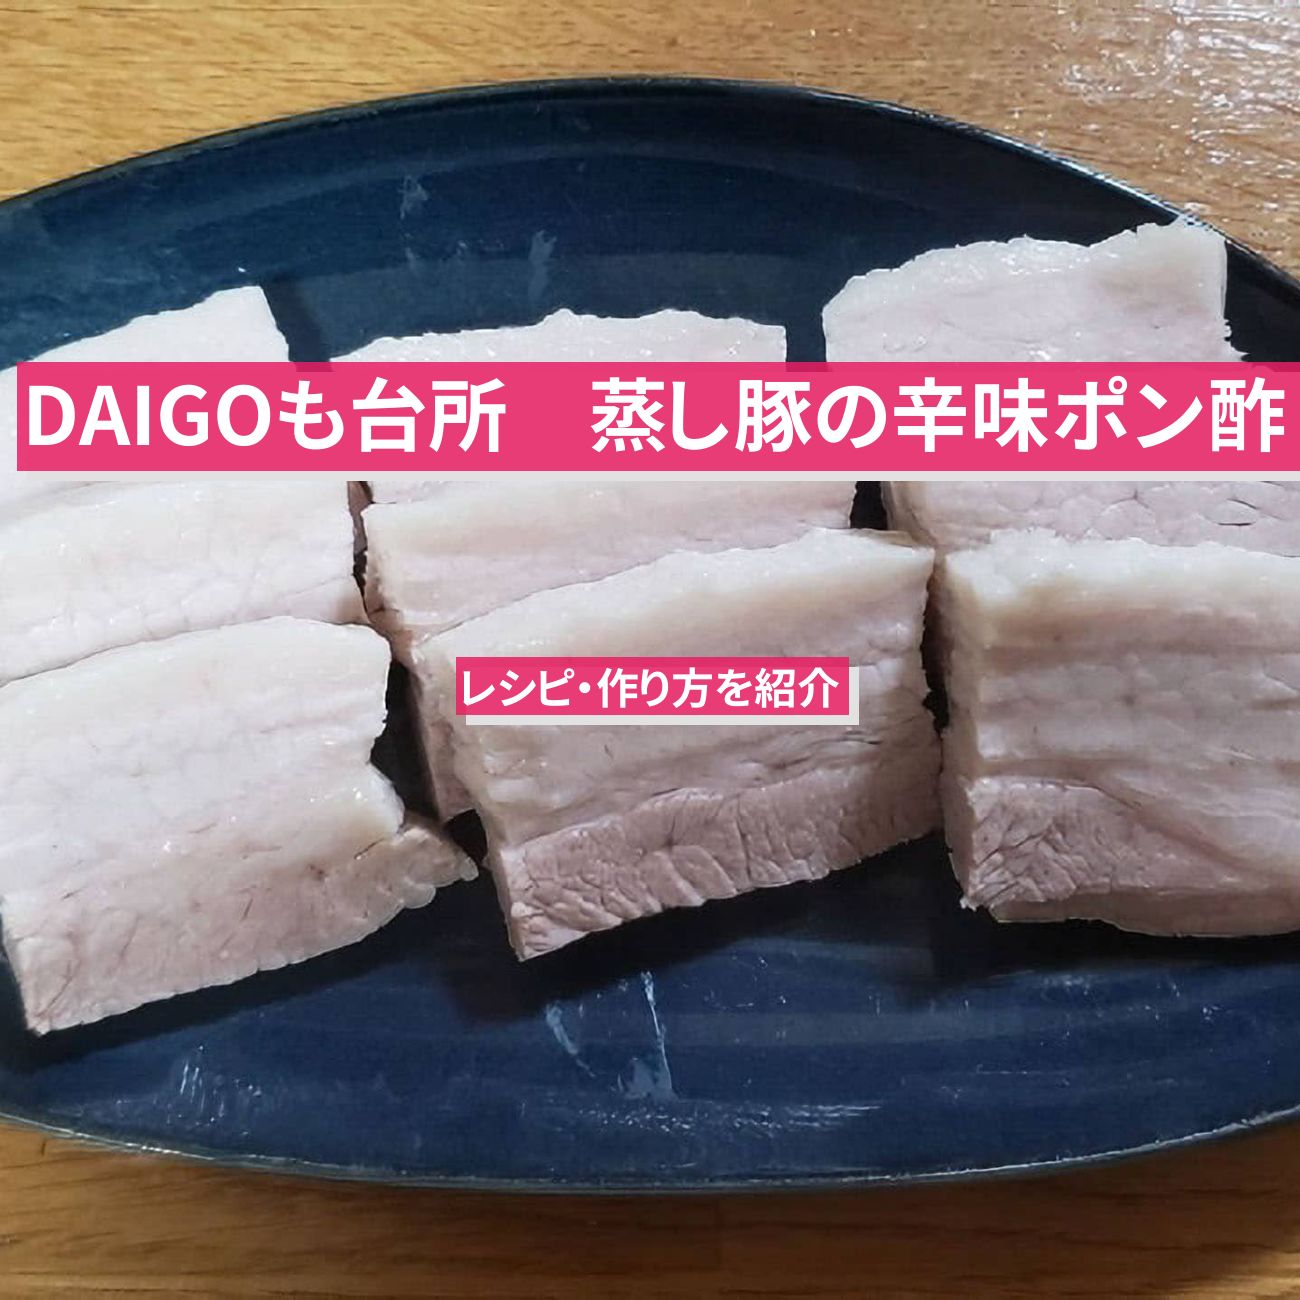 【DAIGOも台所】豚バラ肉で『蒸し豚の辛味ポン酢』のレシピ・作り方を紹介〔ダイゴも台所〕